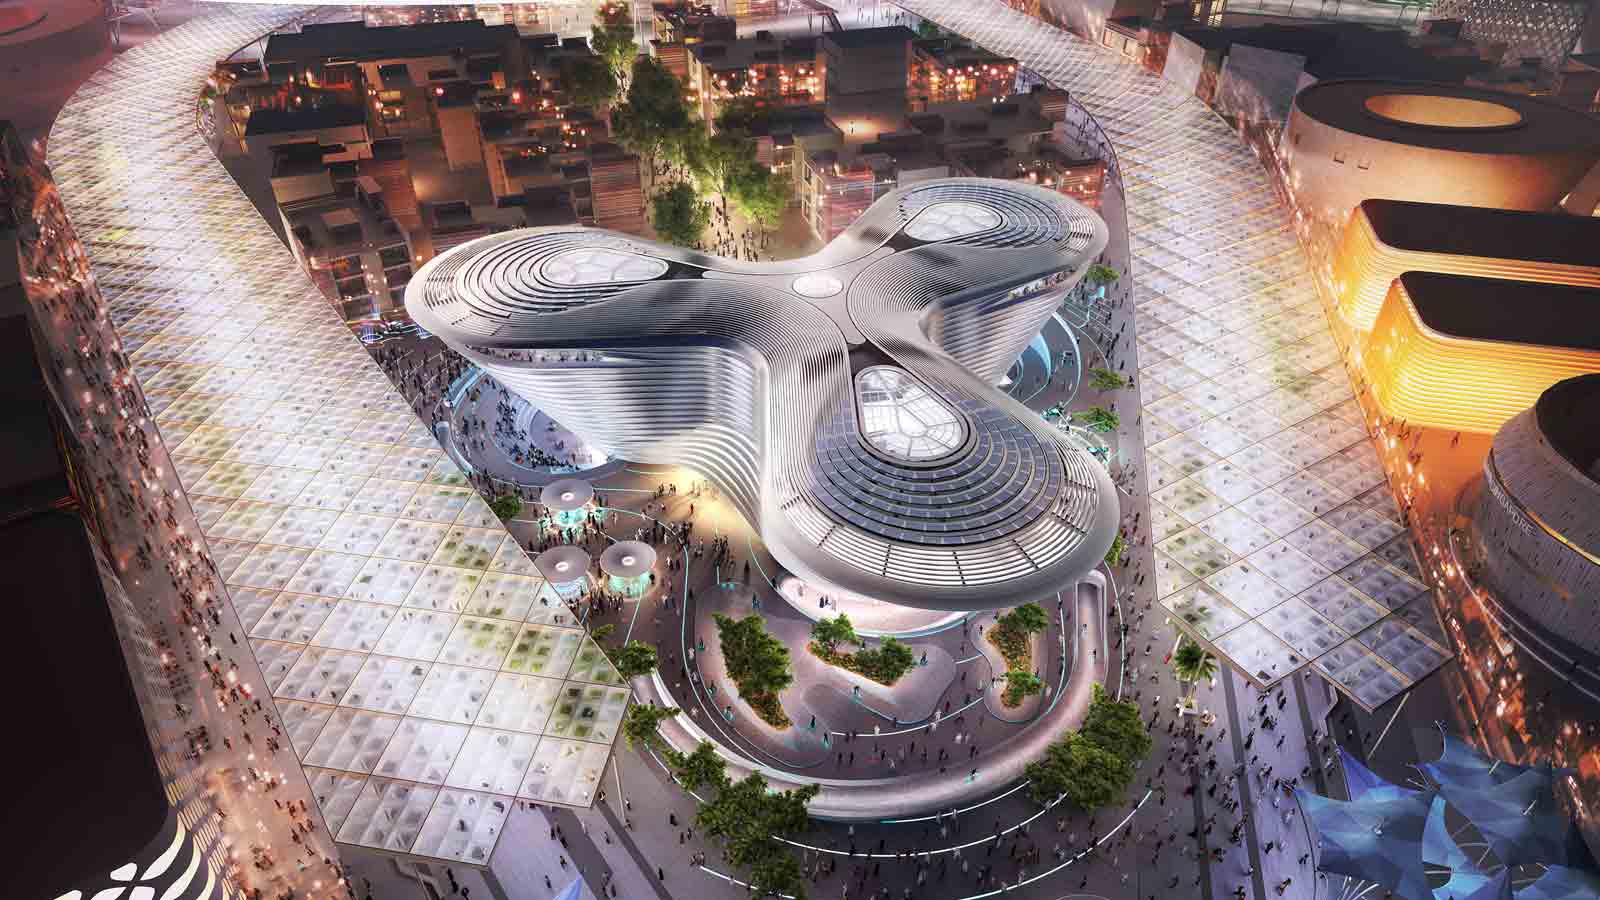 Mobility Pavilion - Expo 2020 Dubai